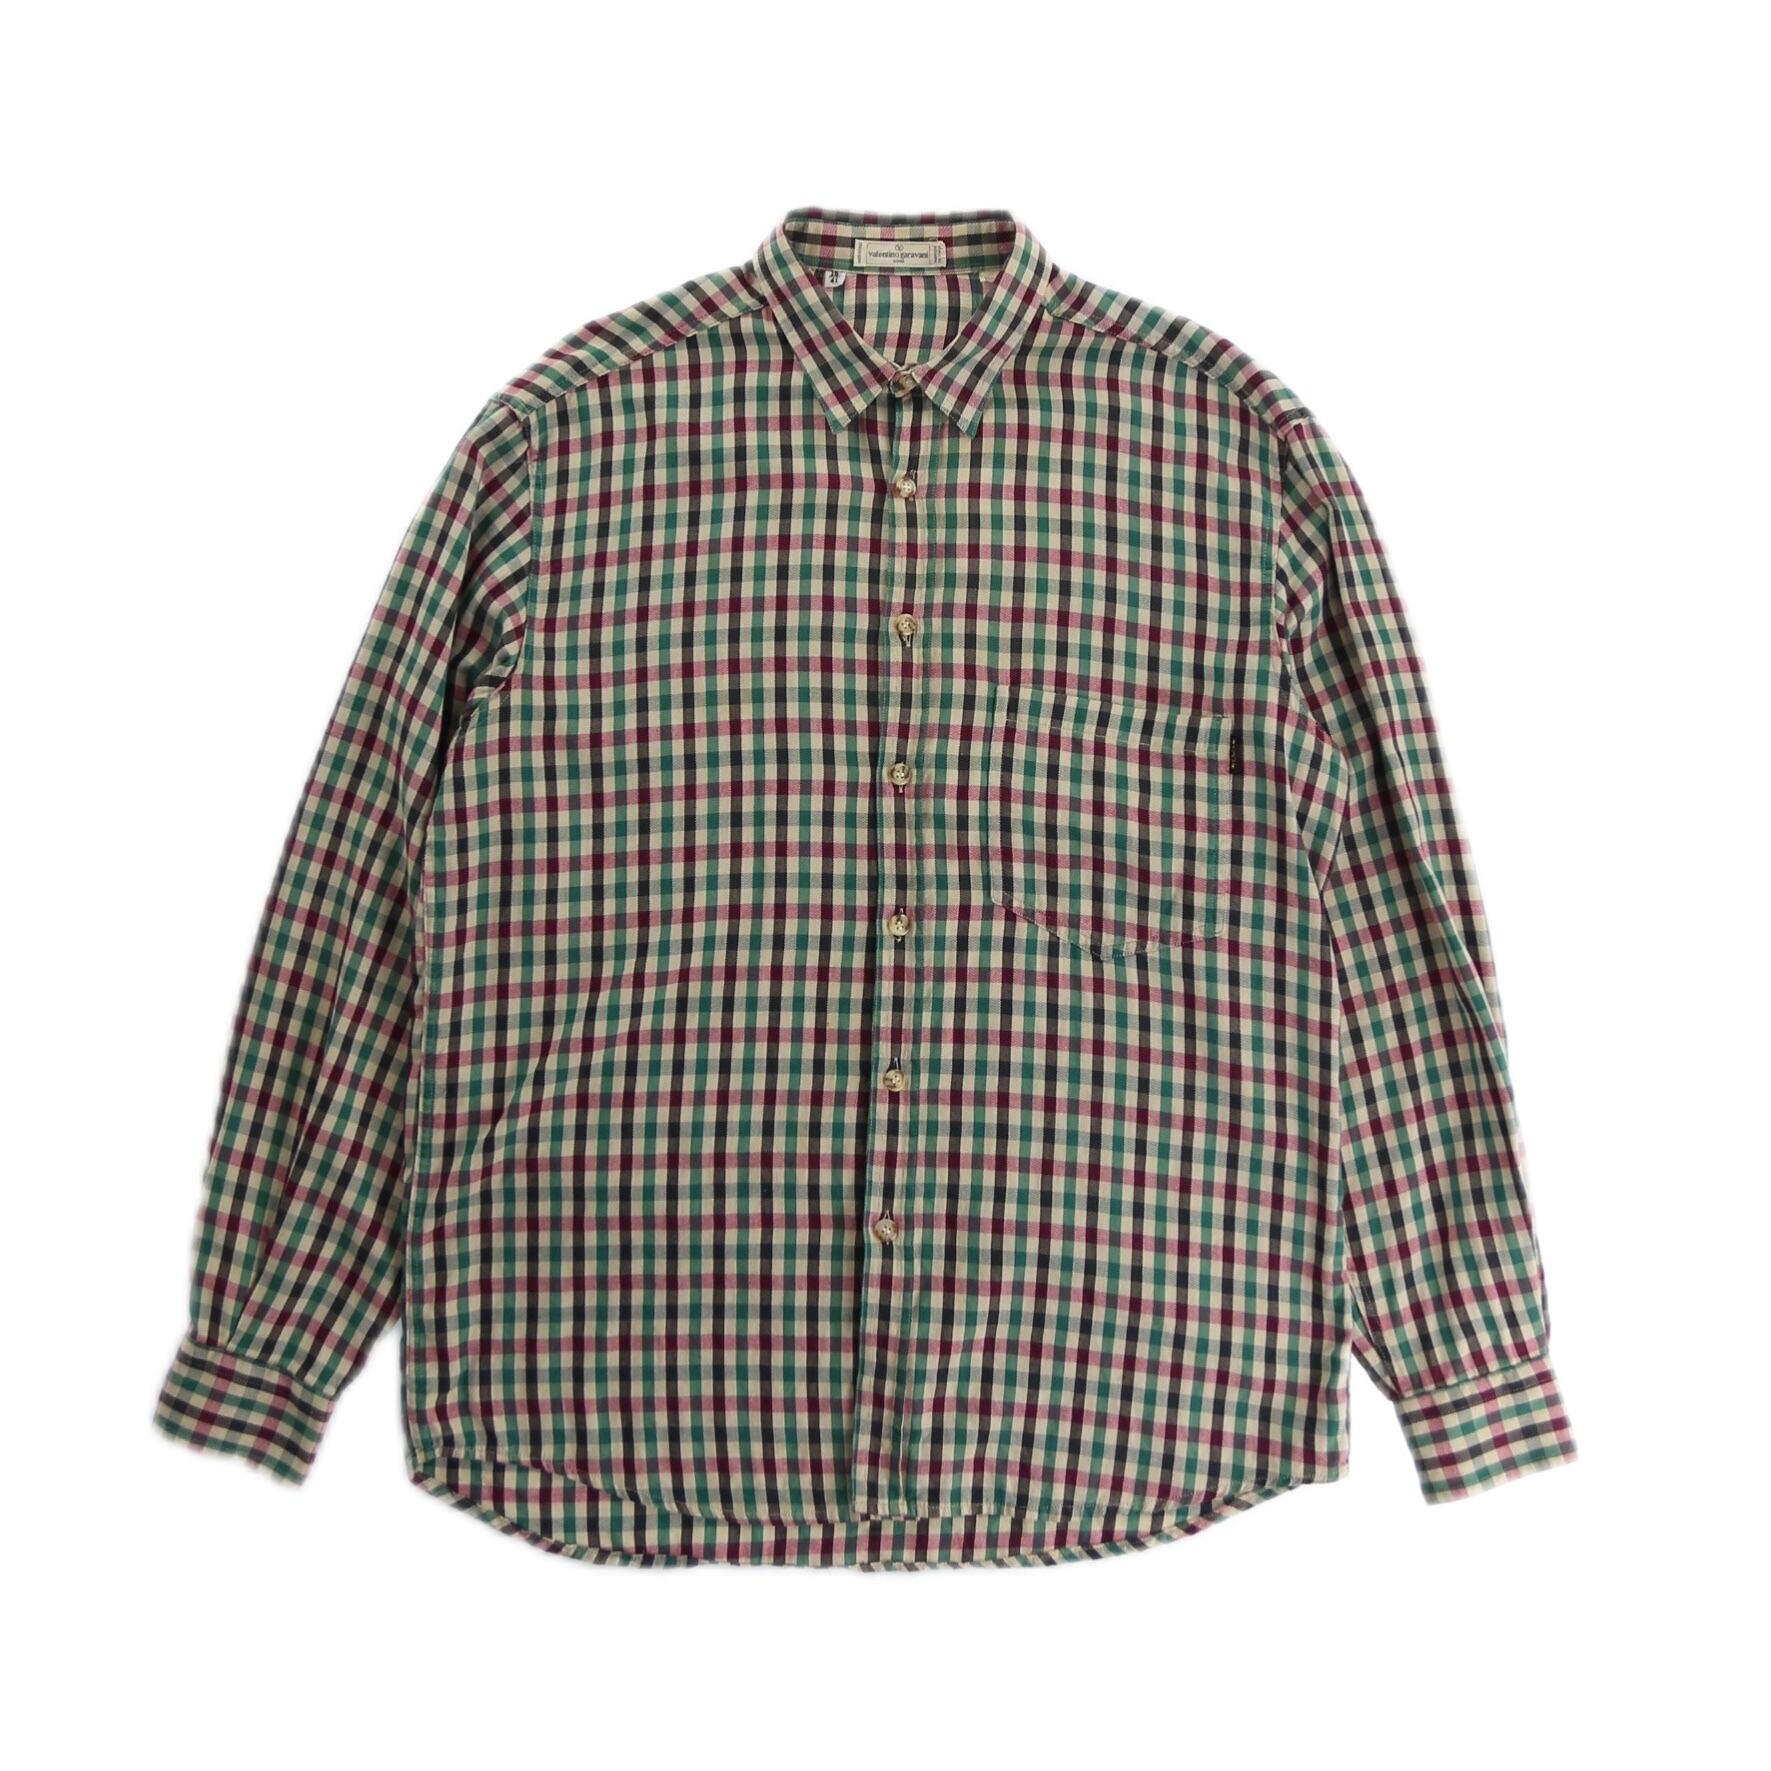 CUBA】1990s vintage VALENTINO GARAVANI check pattern rayon shirt